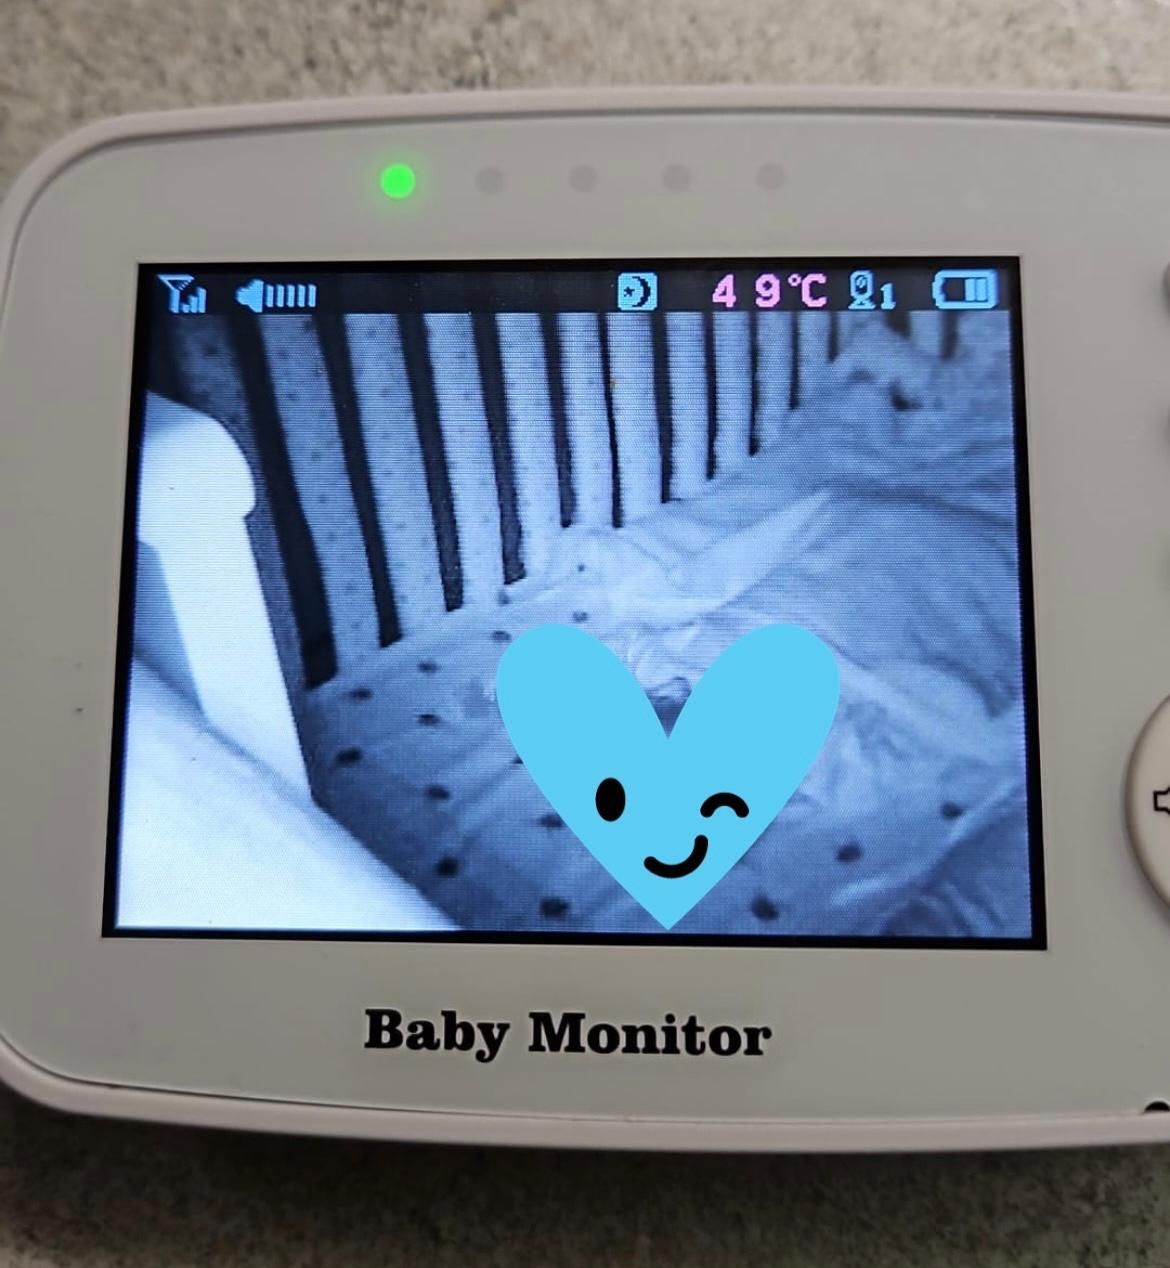 Baby Monitor Smartic model SM32